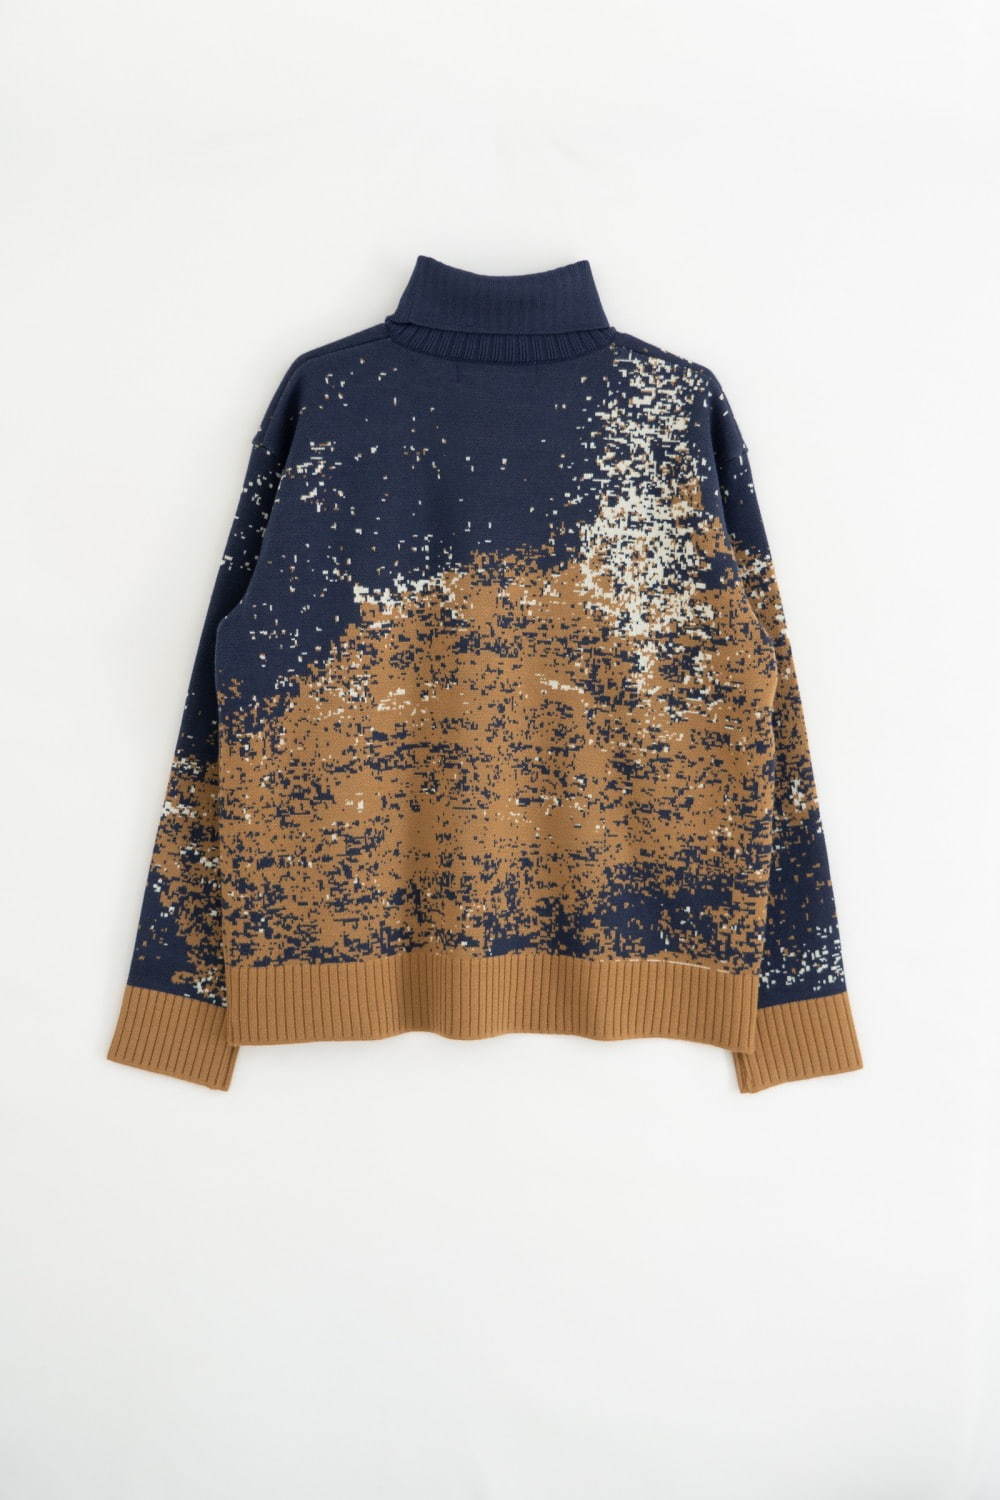 ray of light knit sweater 33,000円(税込)